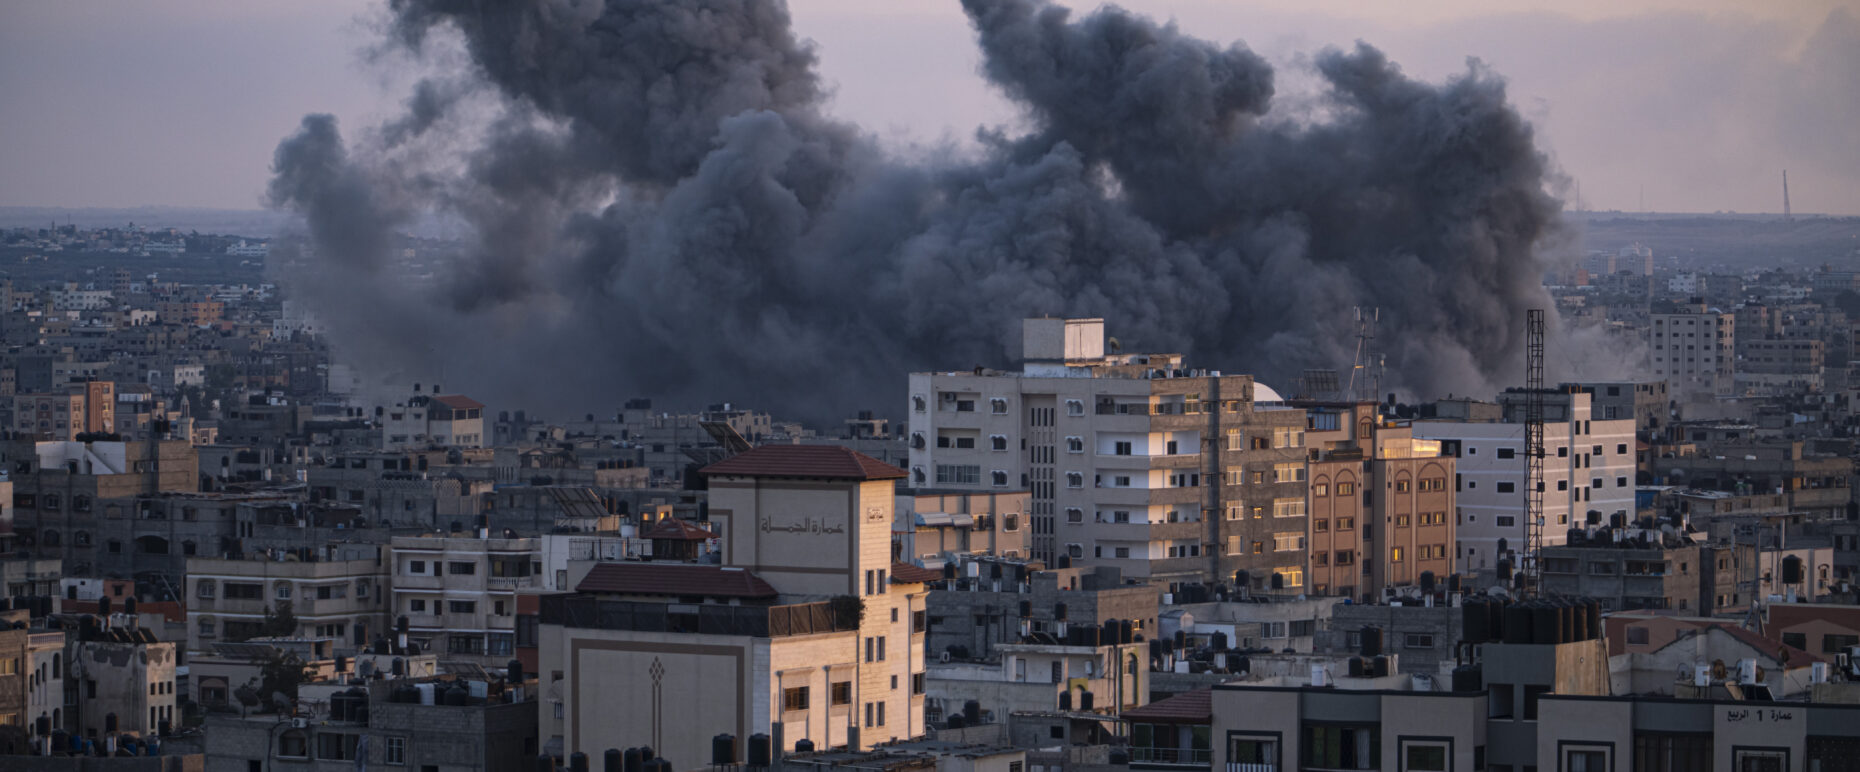 Black smoke rising above buildings following Israeli airstrike in gaza city